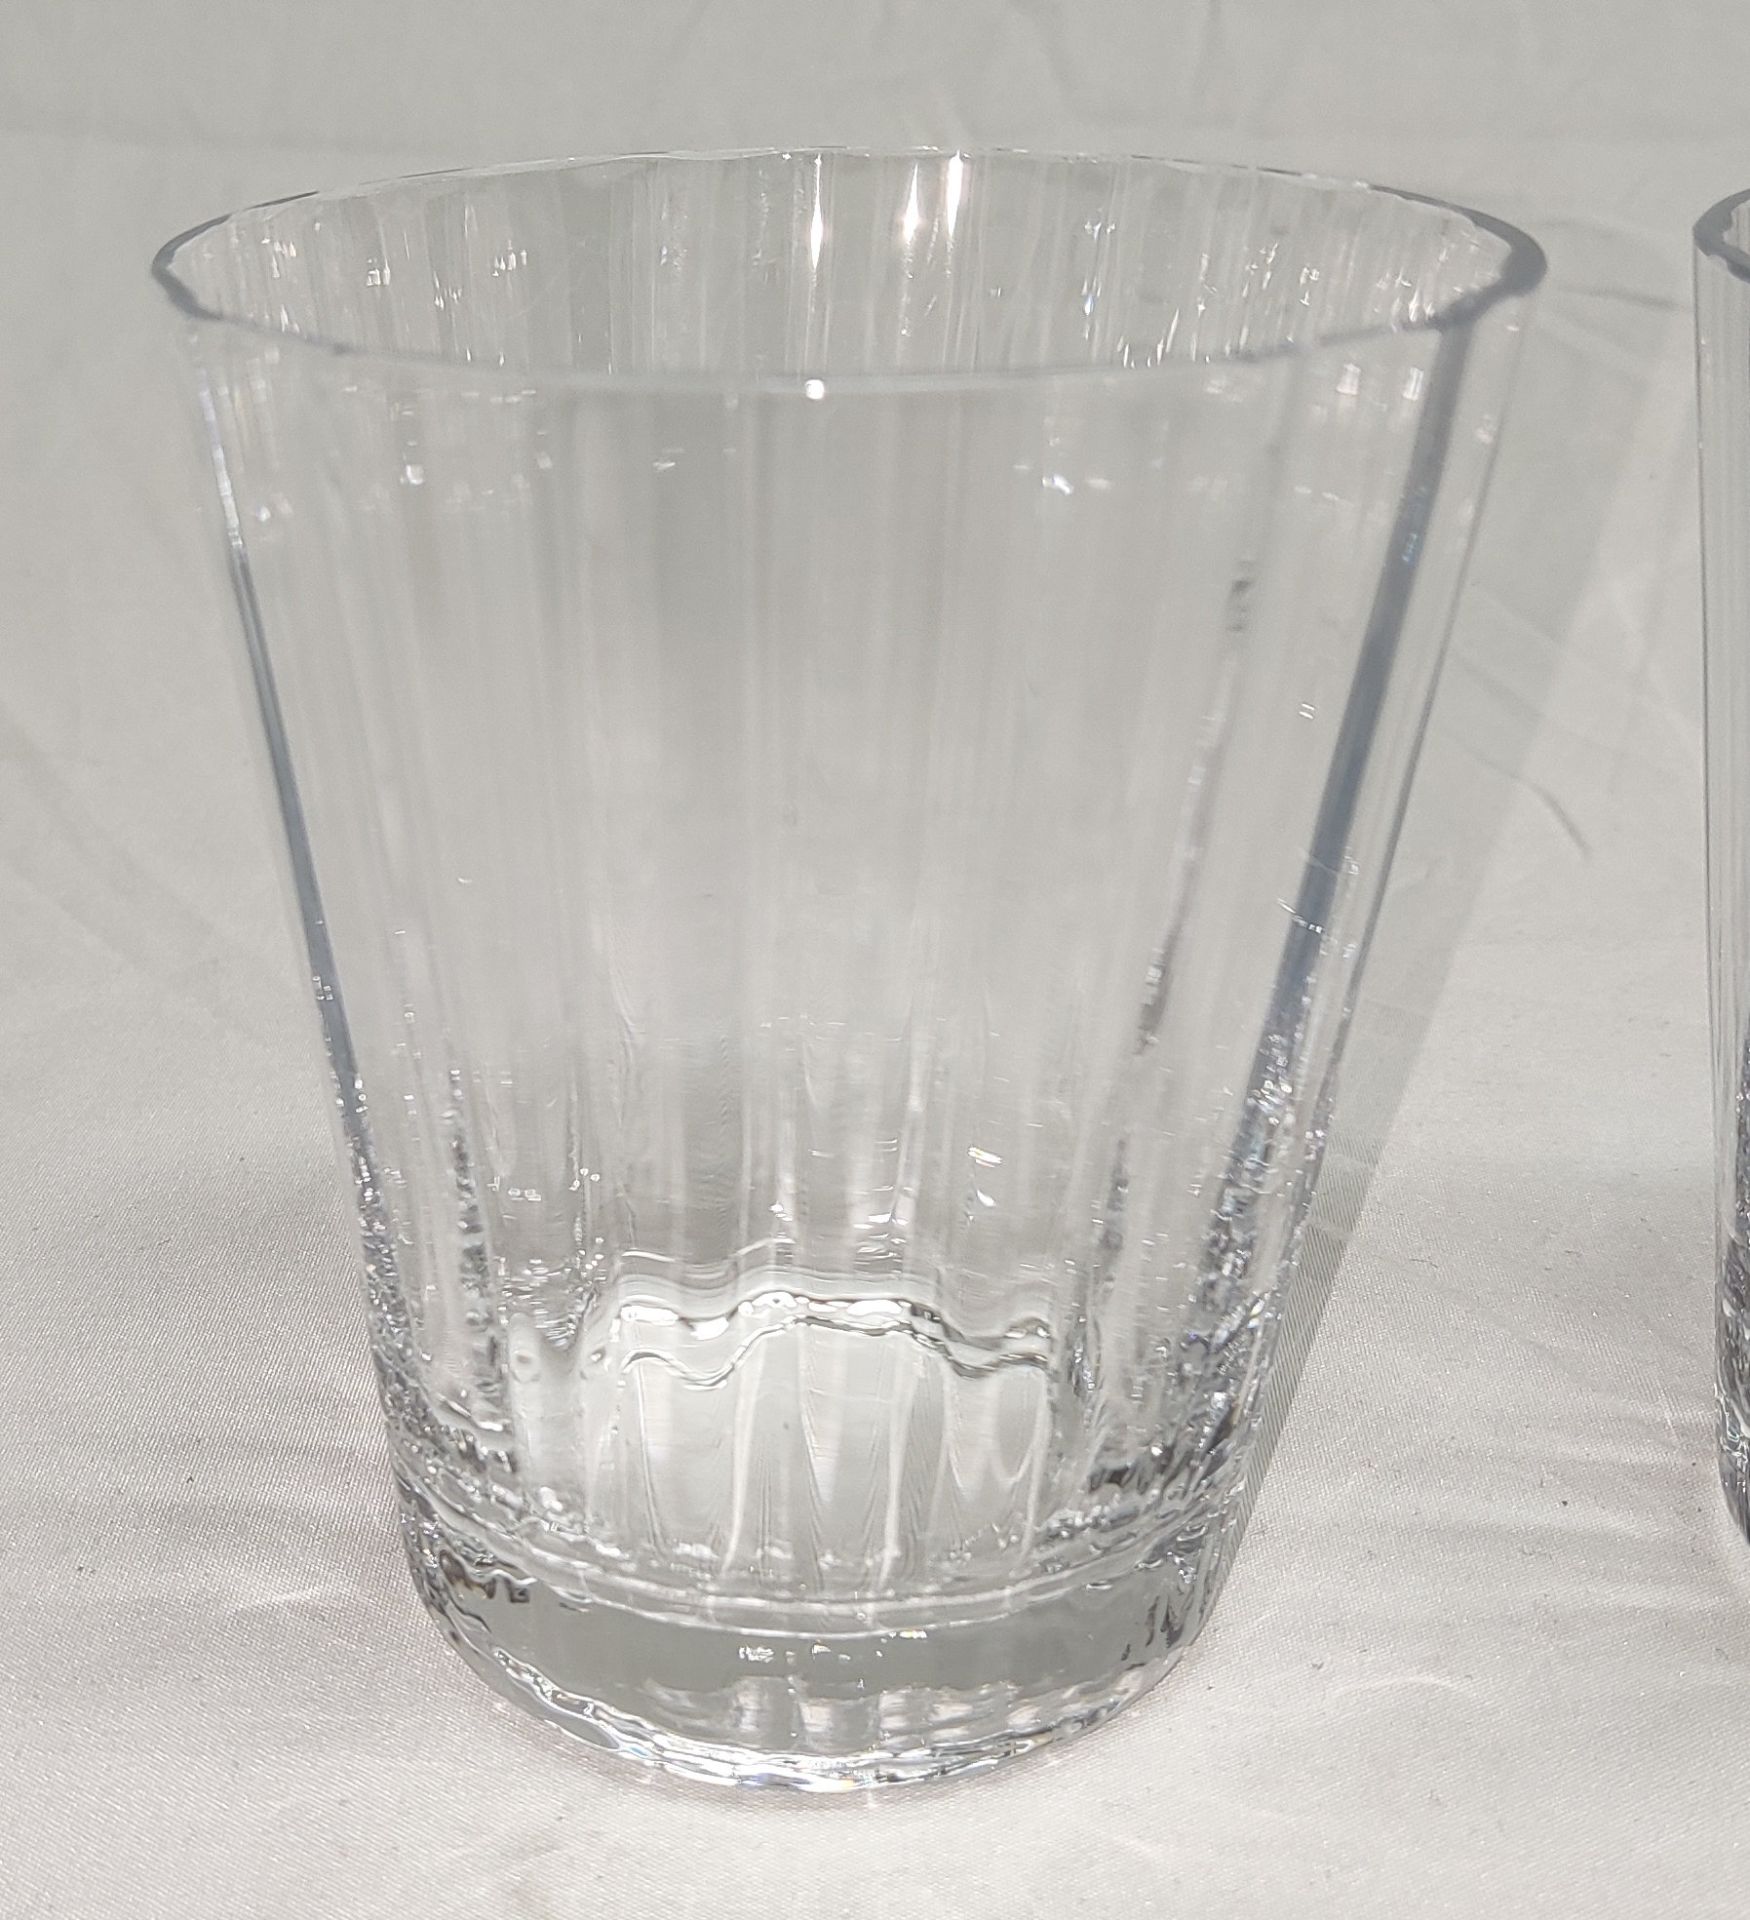 3 x SOHO HOME Pembroke Low Ball Glasses - New/Boxed - Original RRP £70 - Ref: 6909149/HJL368/C19/ - Image 9 of 11